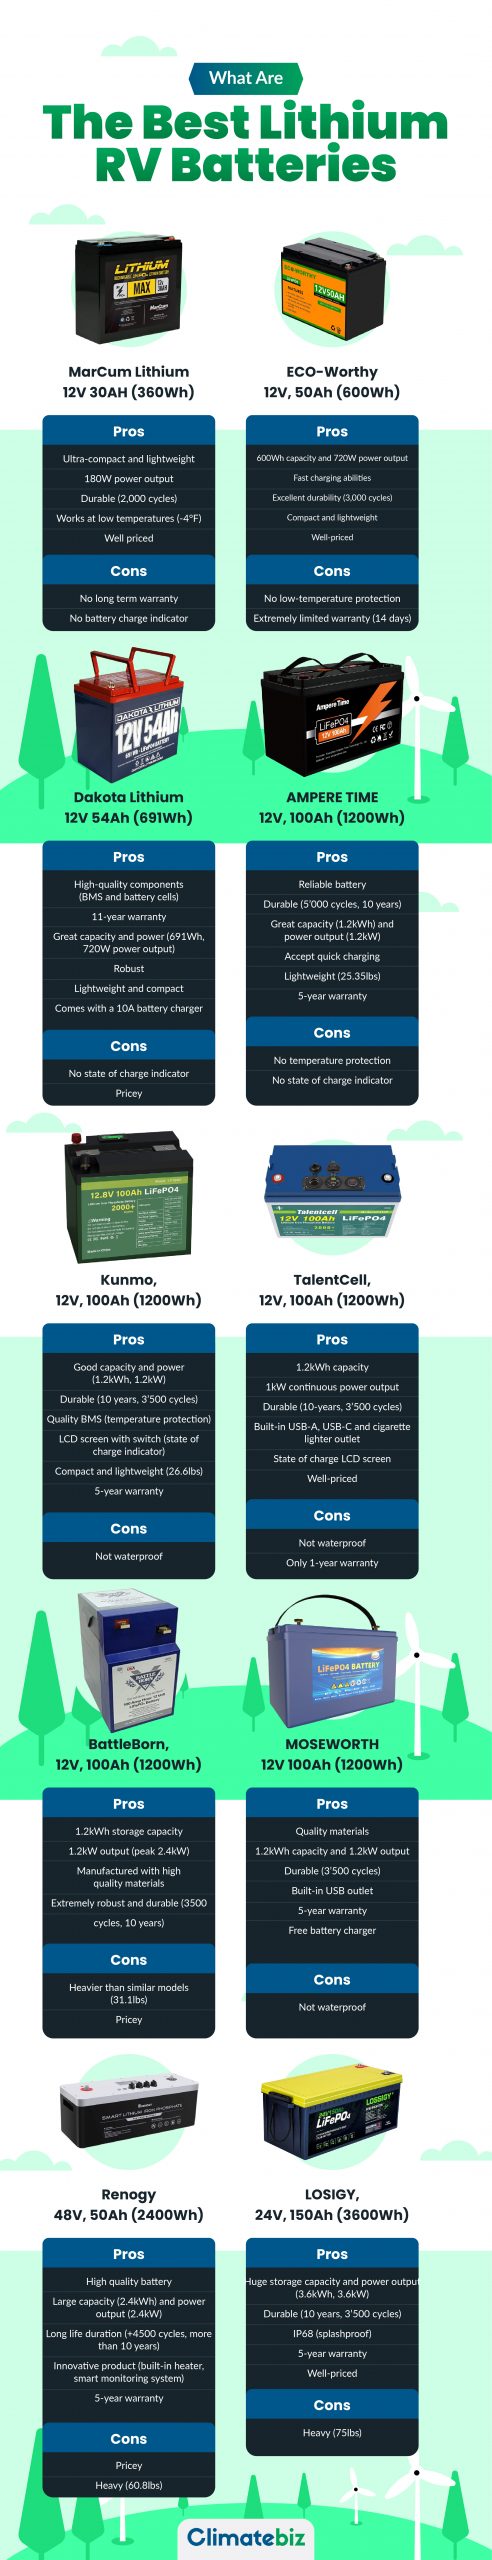 best ltihium RV batteries infographic